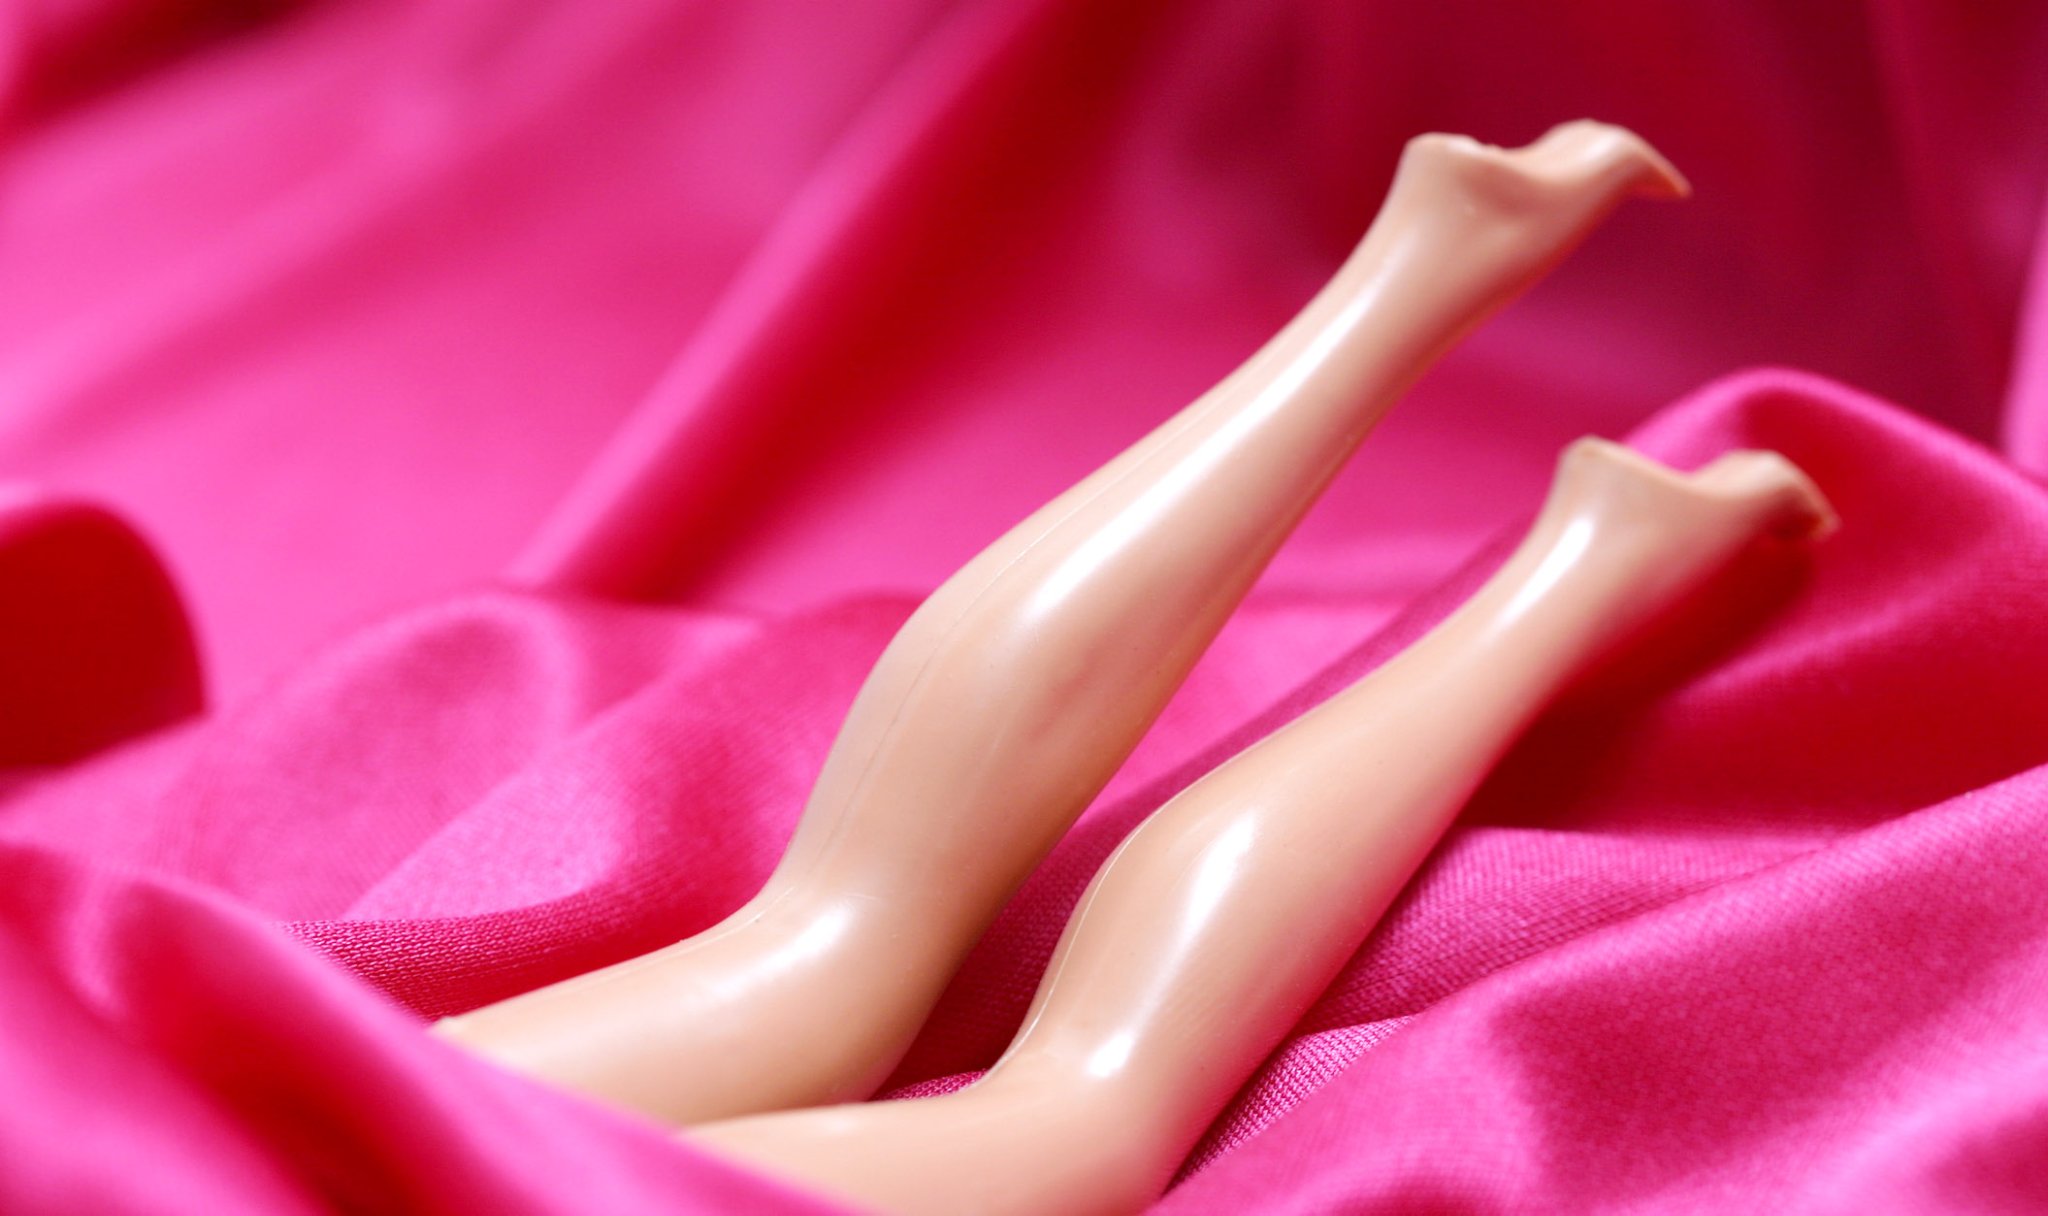 Mattel Has Finally Felt The Need To Address The Strange, Viral 'Barbie Feet' Instagram Trend